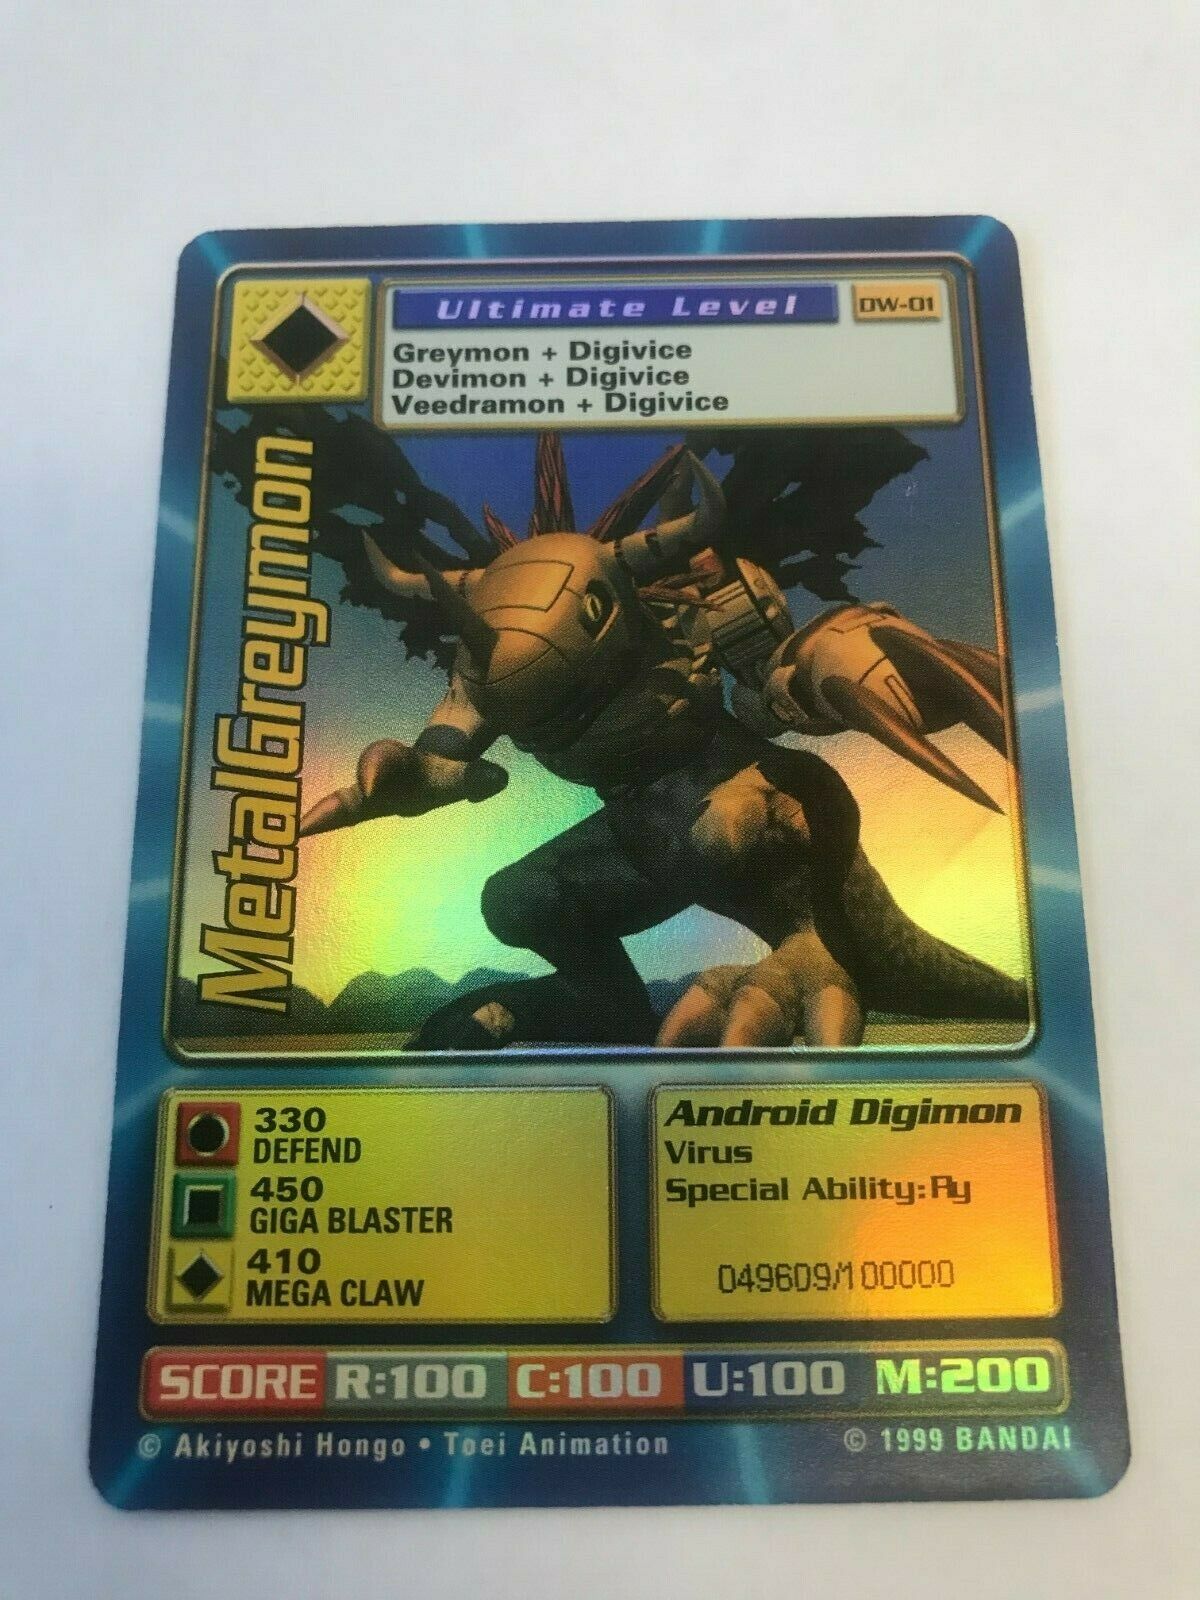 Digimon World PlayStation Promo DW-01 MetalGreymon - number 049609 / 100,000